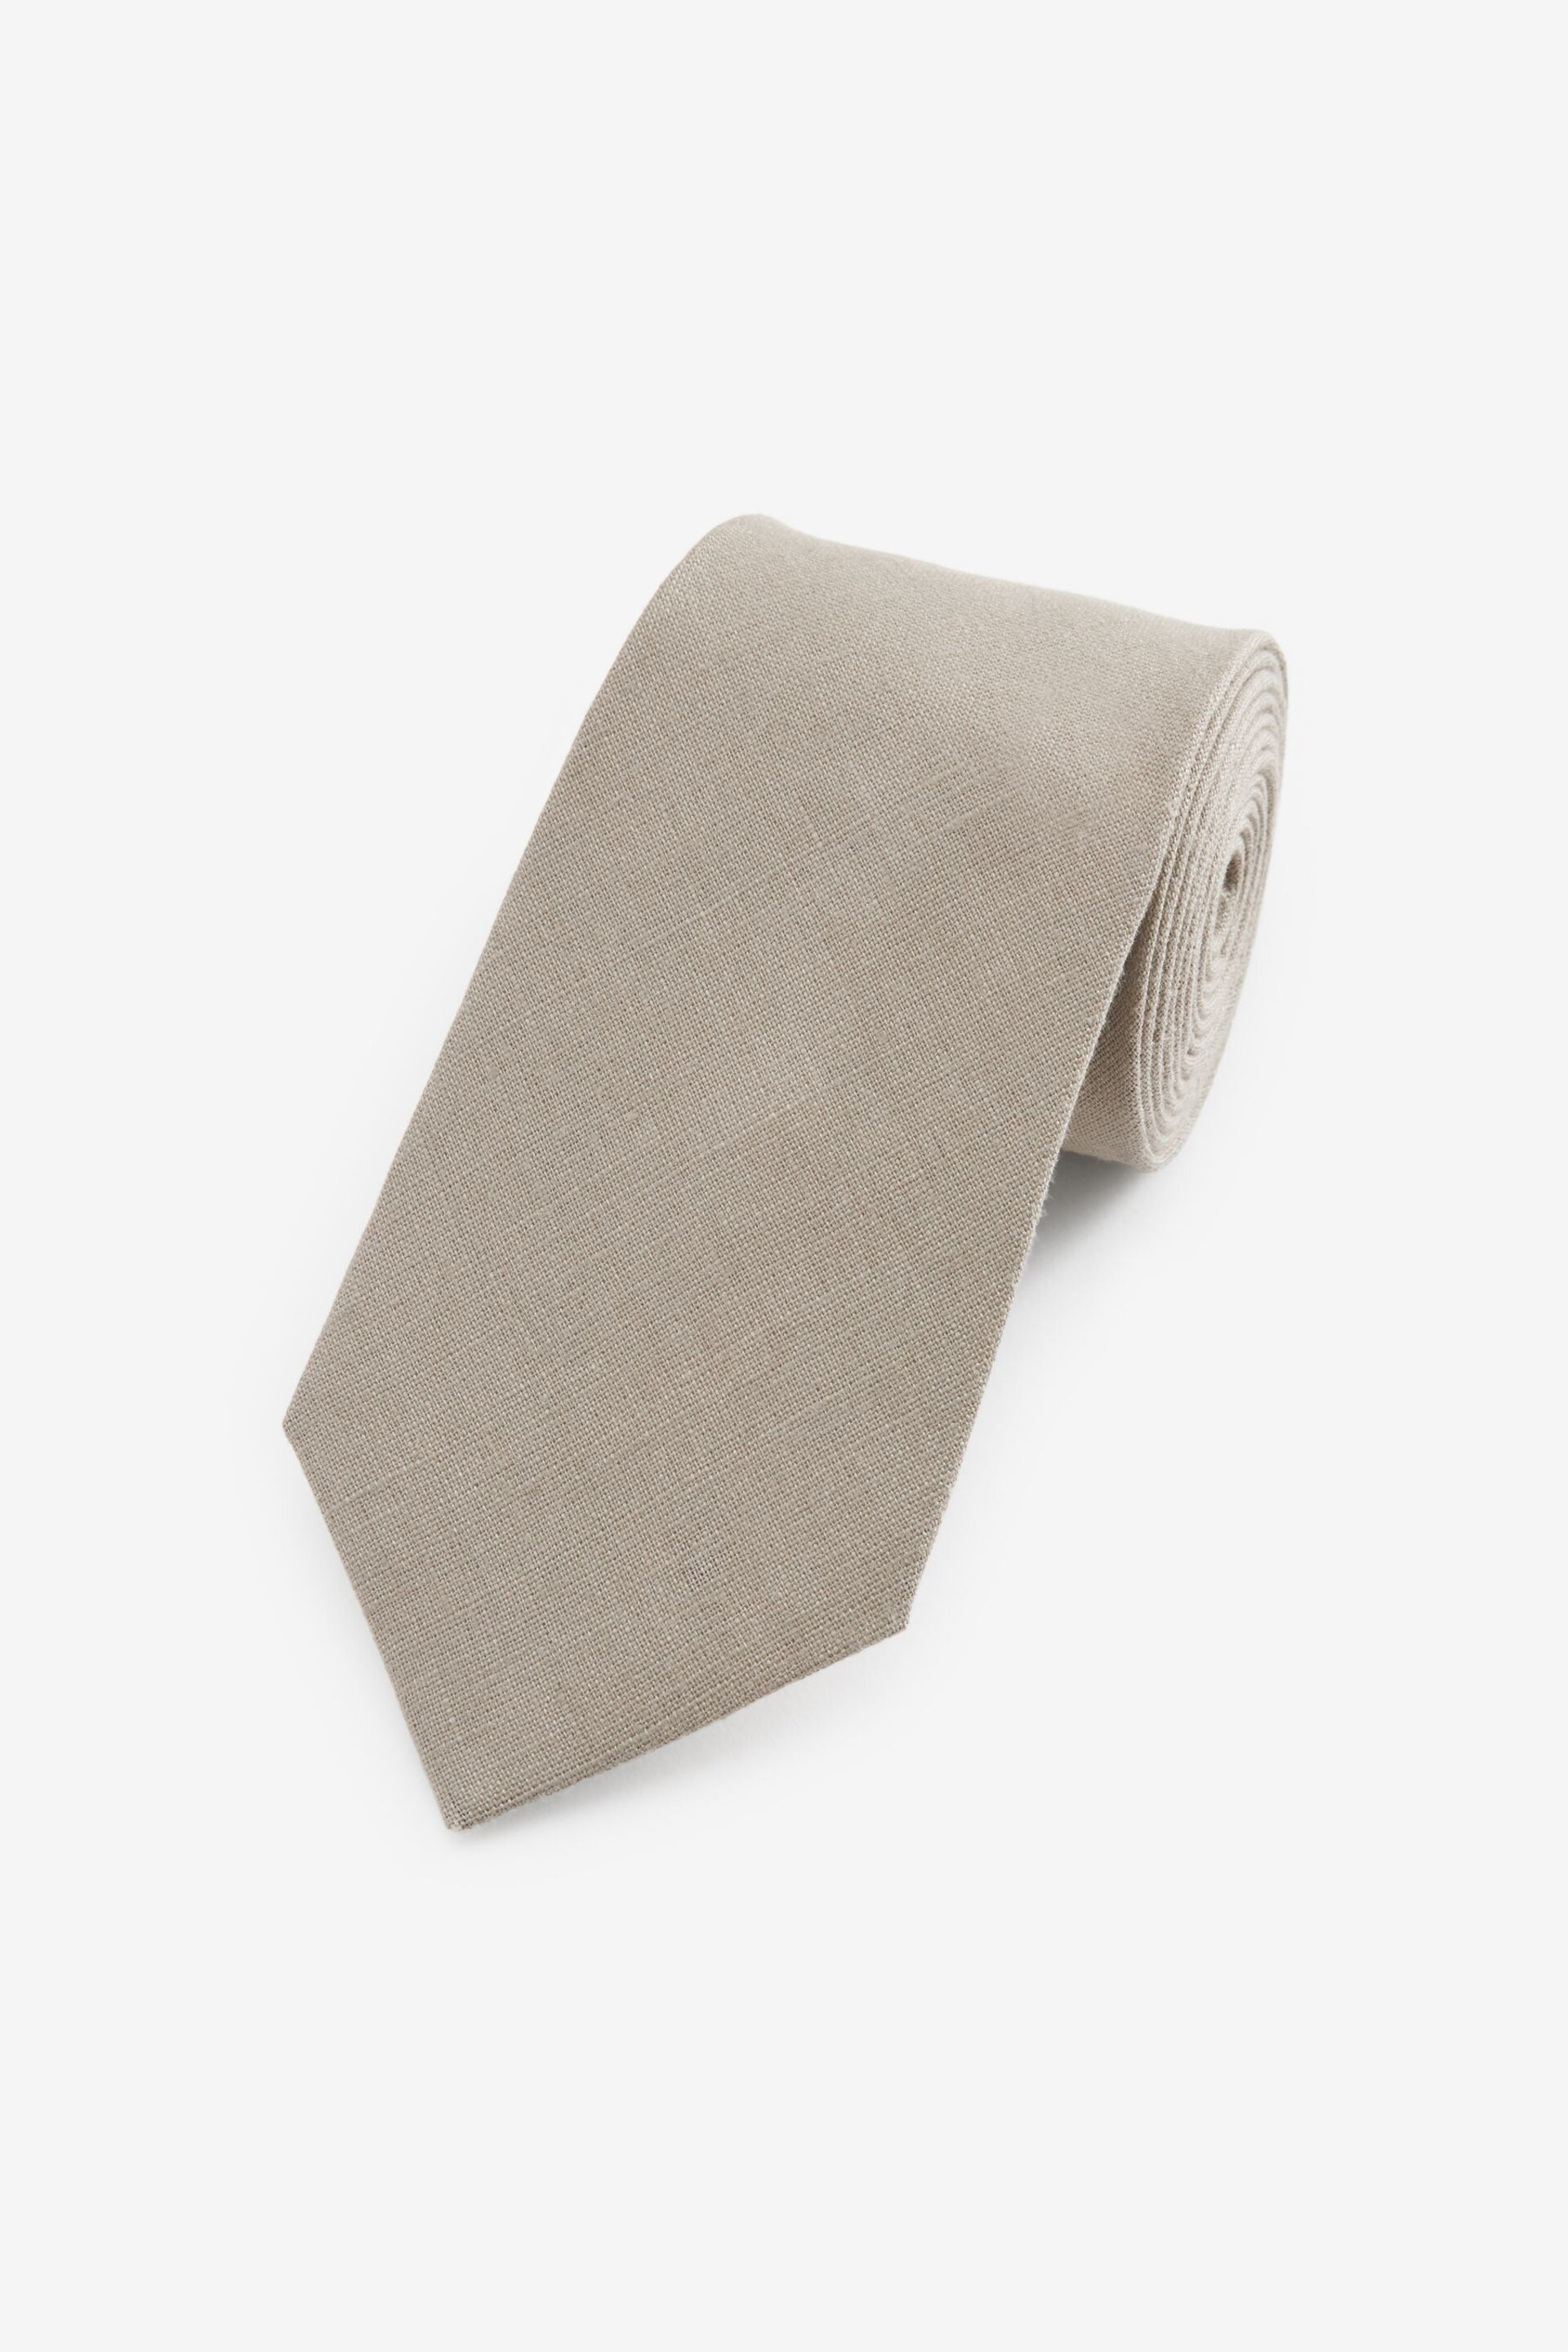 Neutral Brown Linen Tie - Image 1 of 3